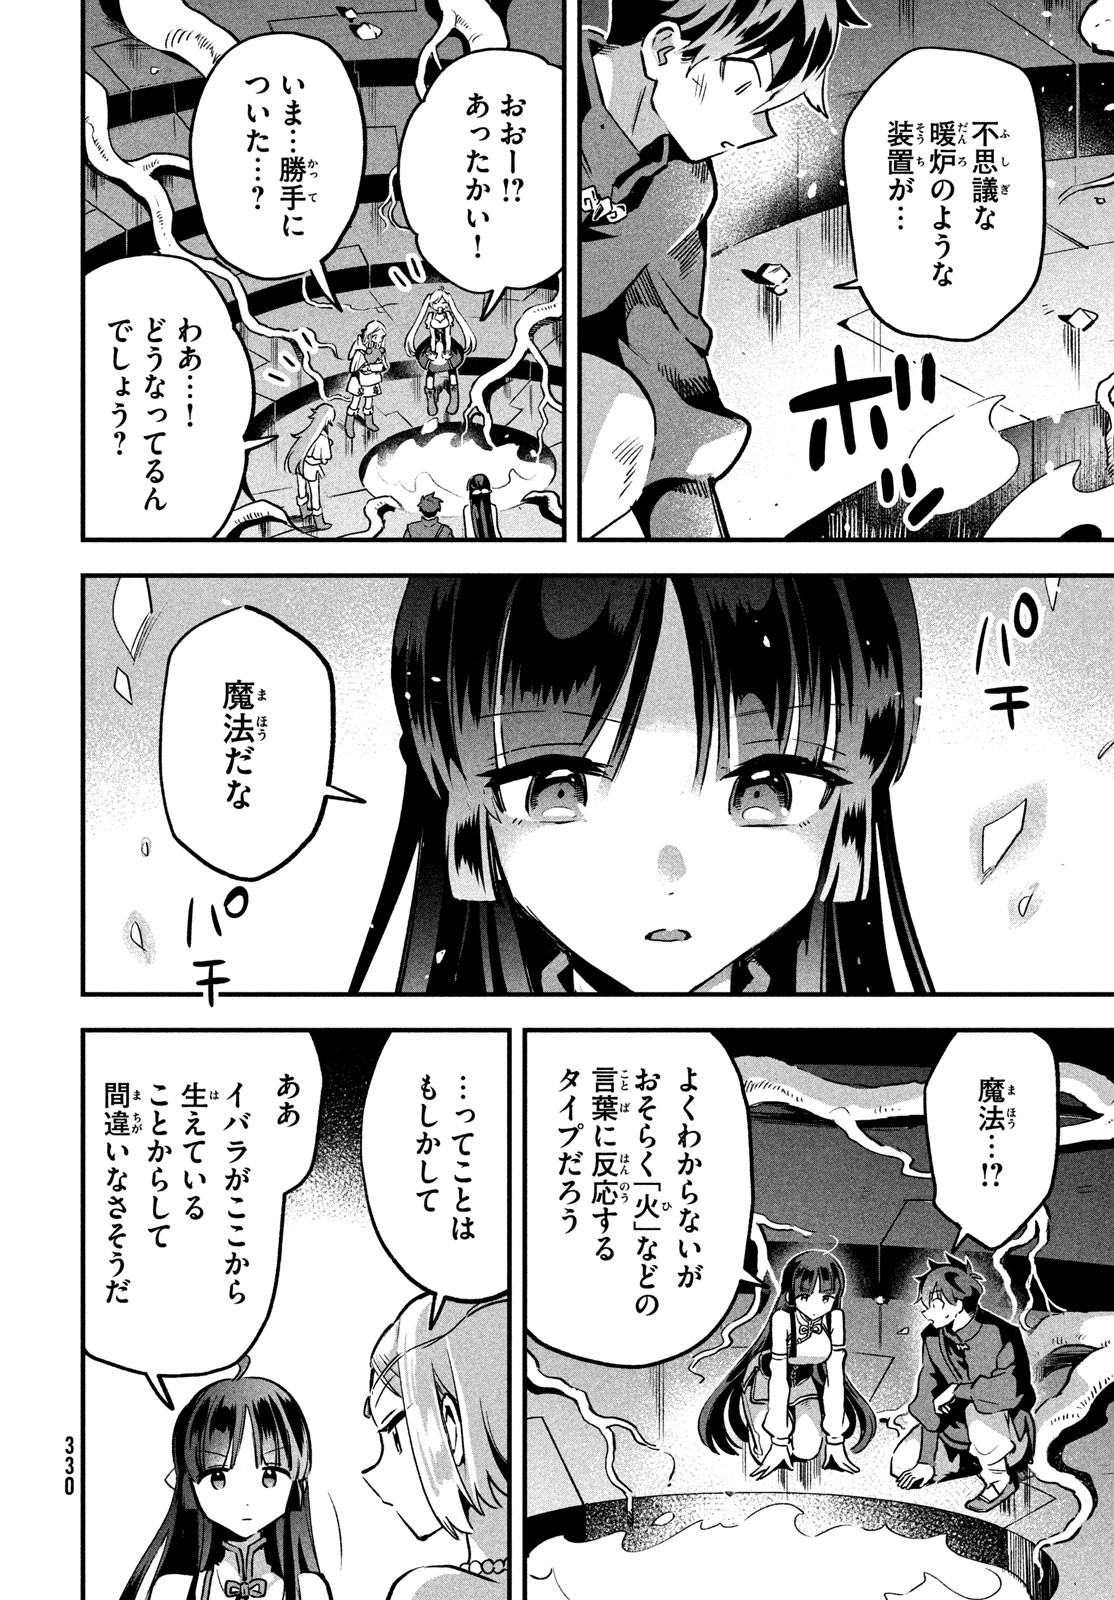 7-nin no Nemuri Hime - Chapter 27 - Page 2